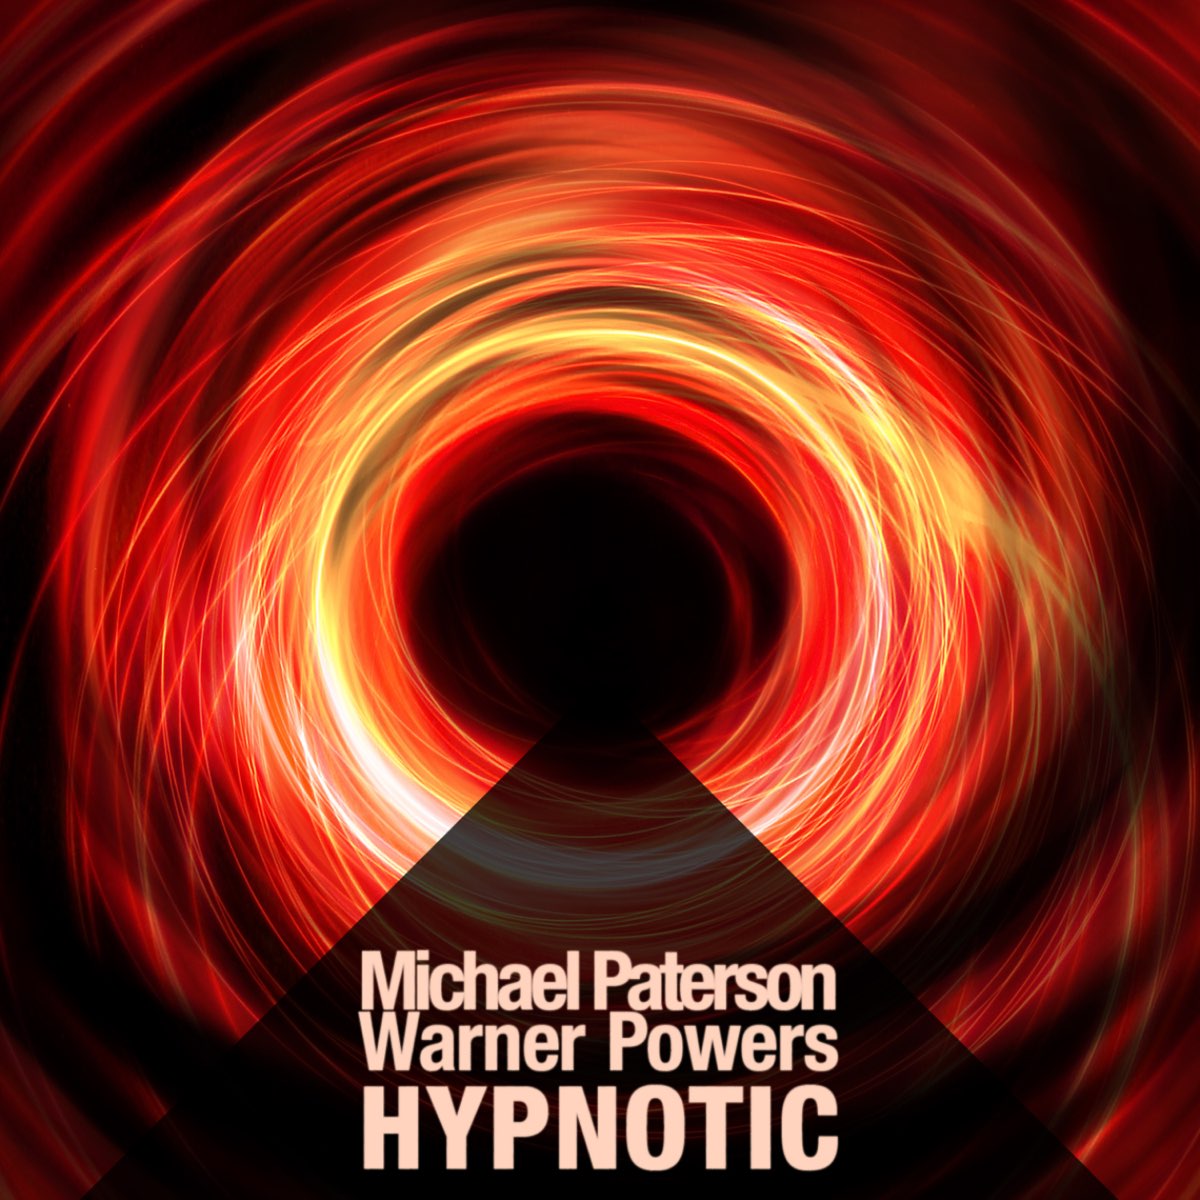 Hypnosis videos. Hypnotic Music. Гипнотик обложка. "Hypnotic Power" 2хл. Hypnotic data обложка.